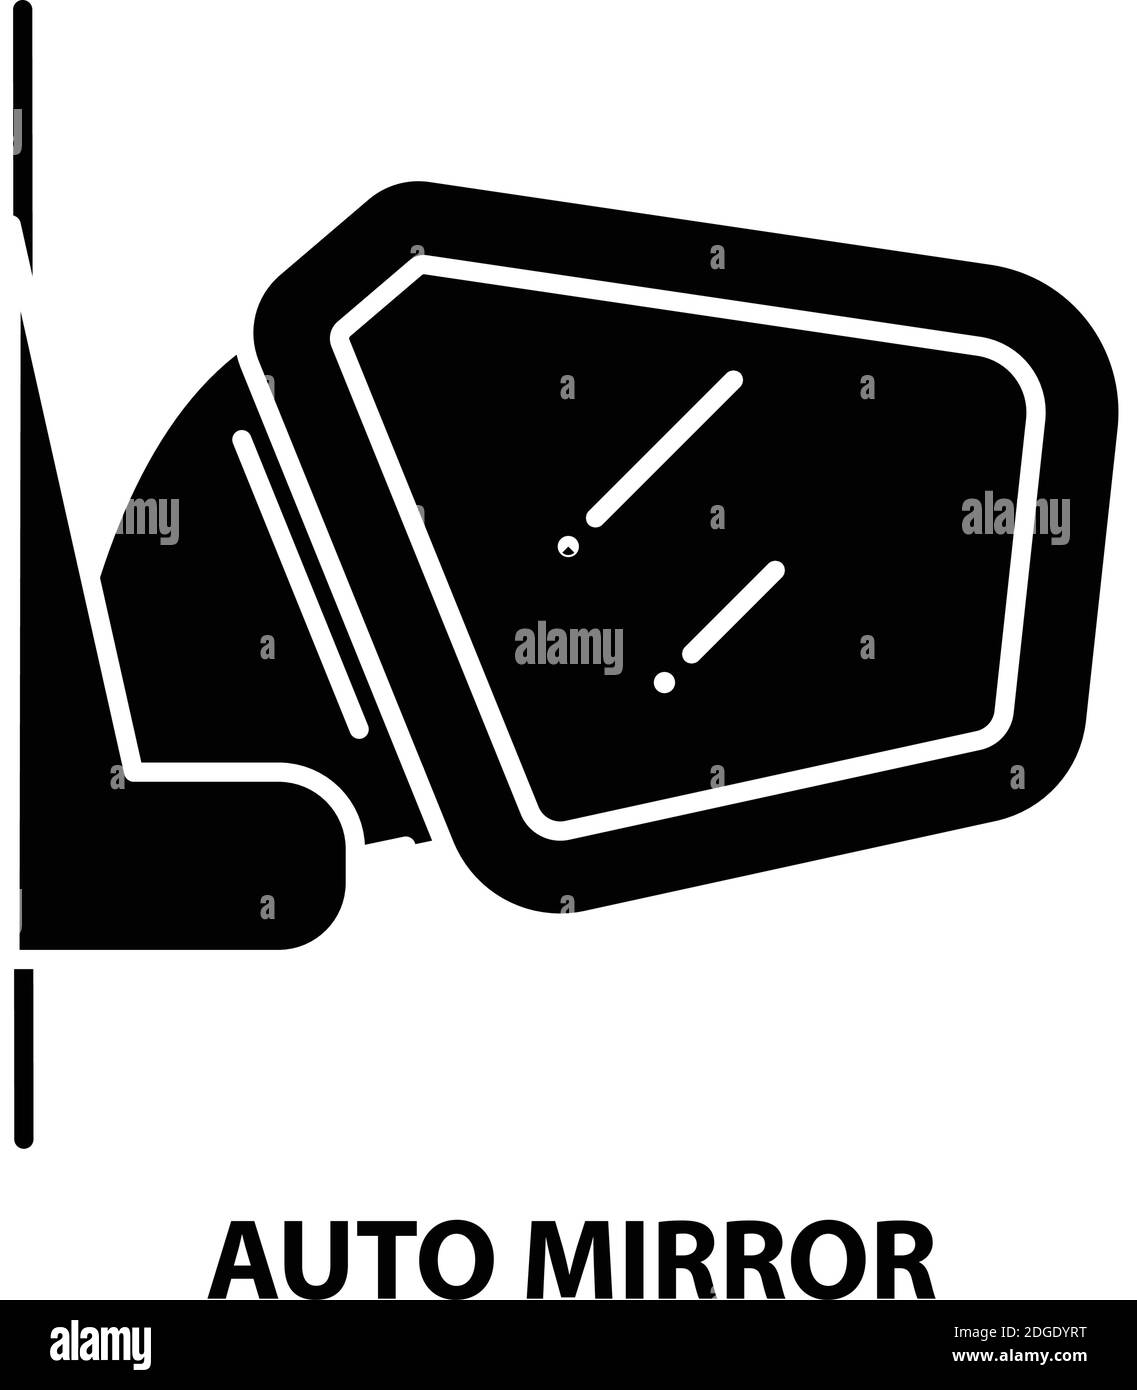 auto mirror icon, black vector sign with editable strokes, concept illustration Stock Vector